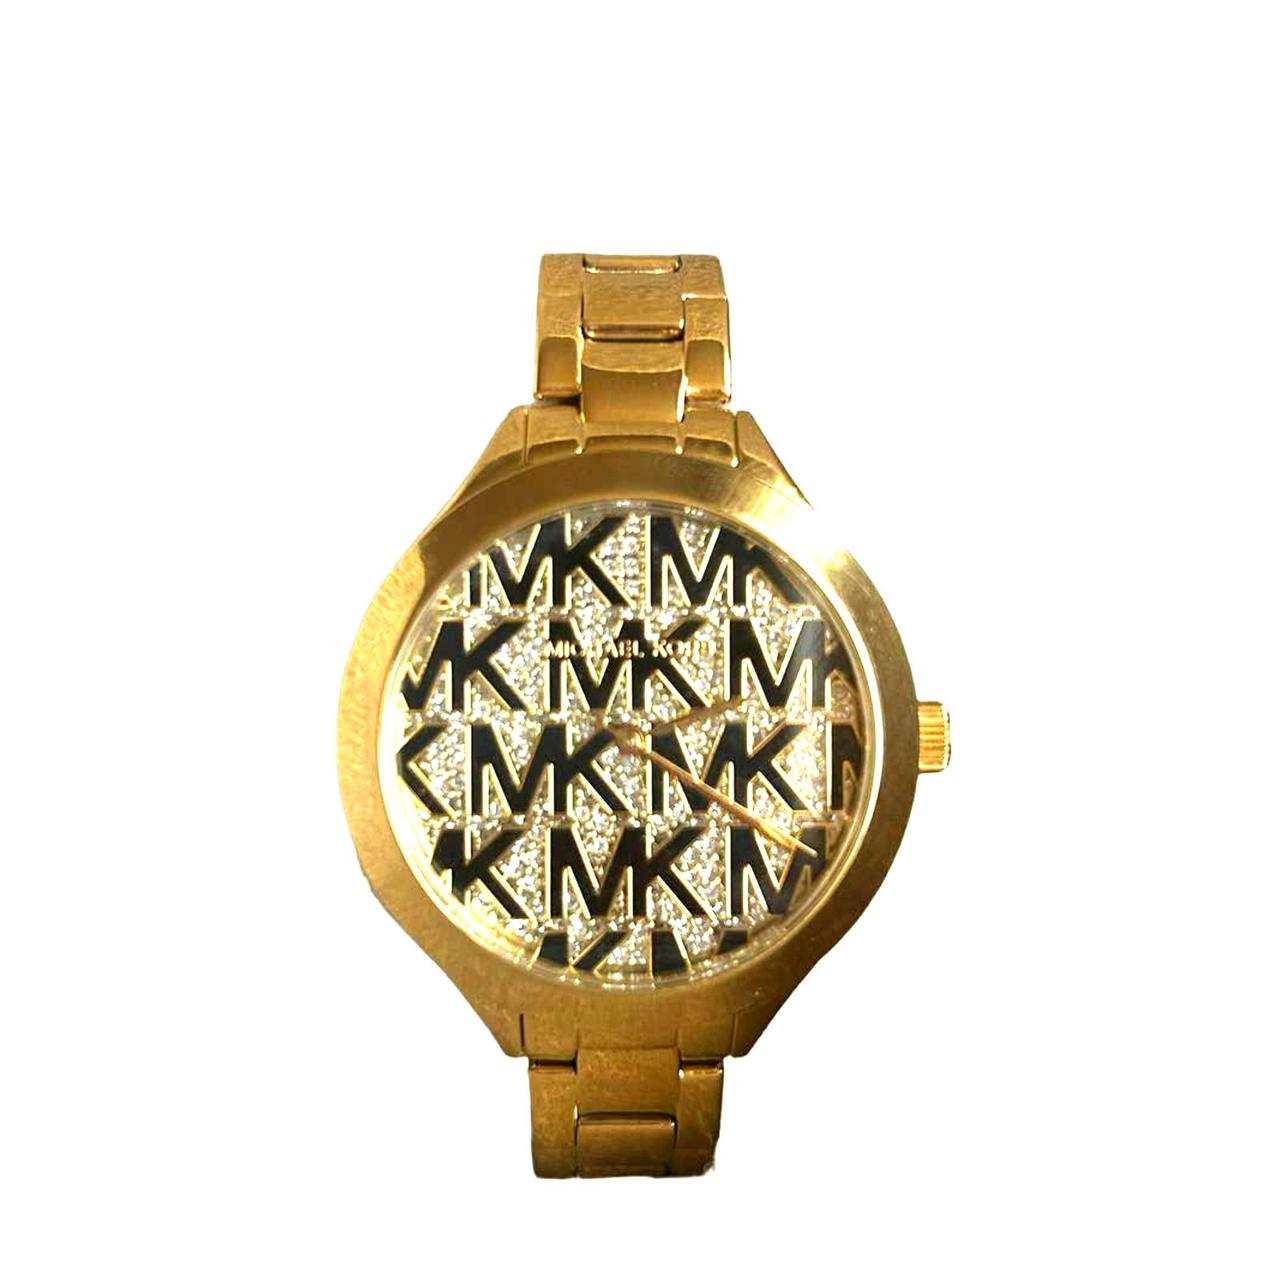 Michael Kors Women's Melissa Three-Hand Rose Gold-Tone Steel Watch